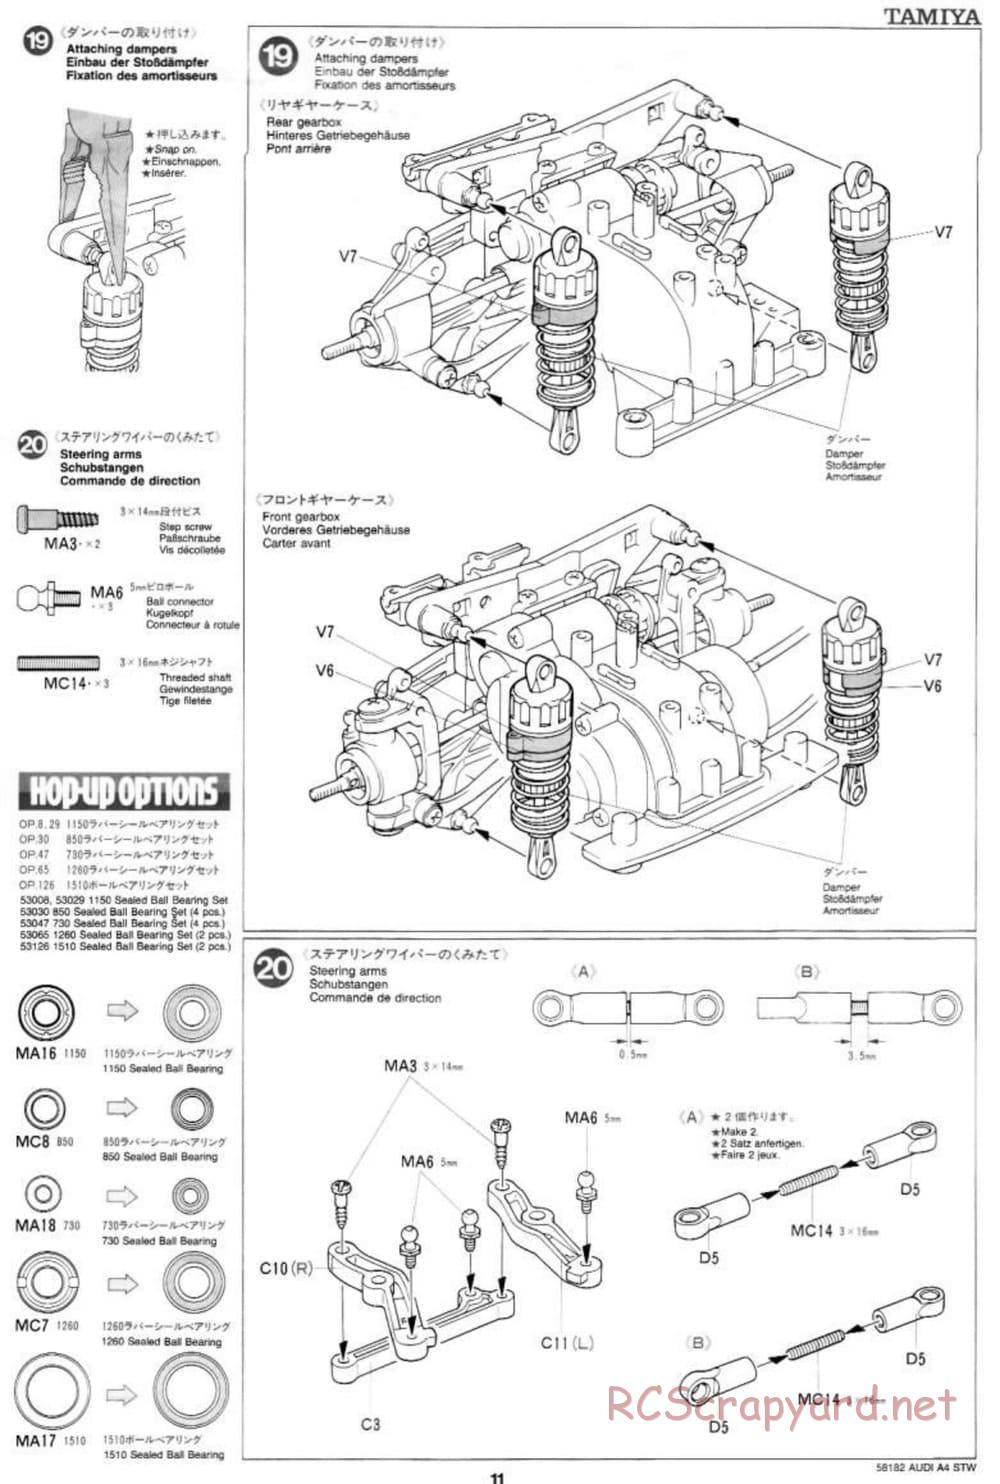 Tamiya - Audi A4 STW - TA-03F Chassis - Manual - Page 11